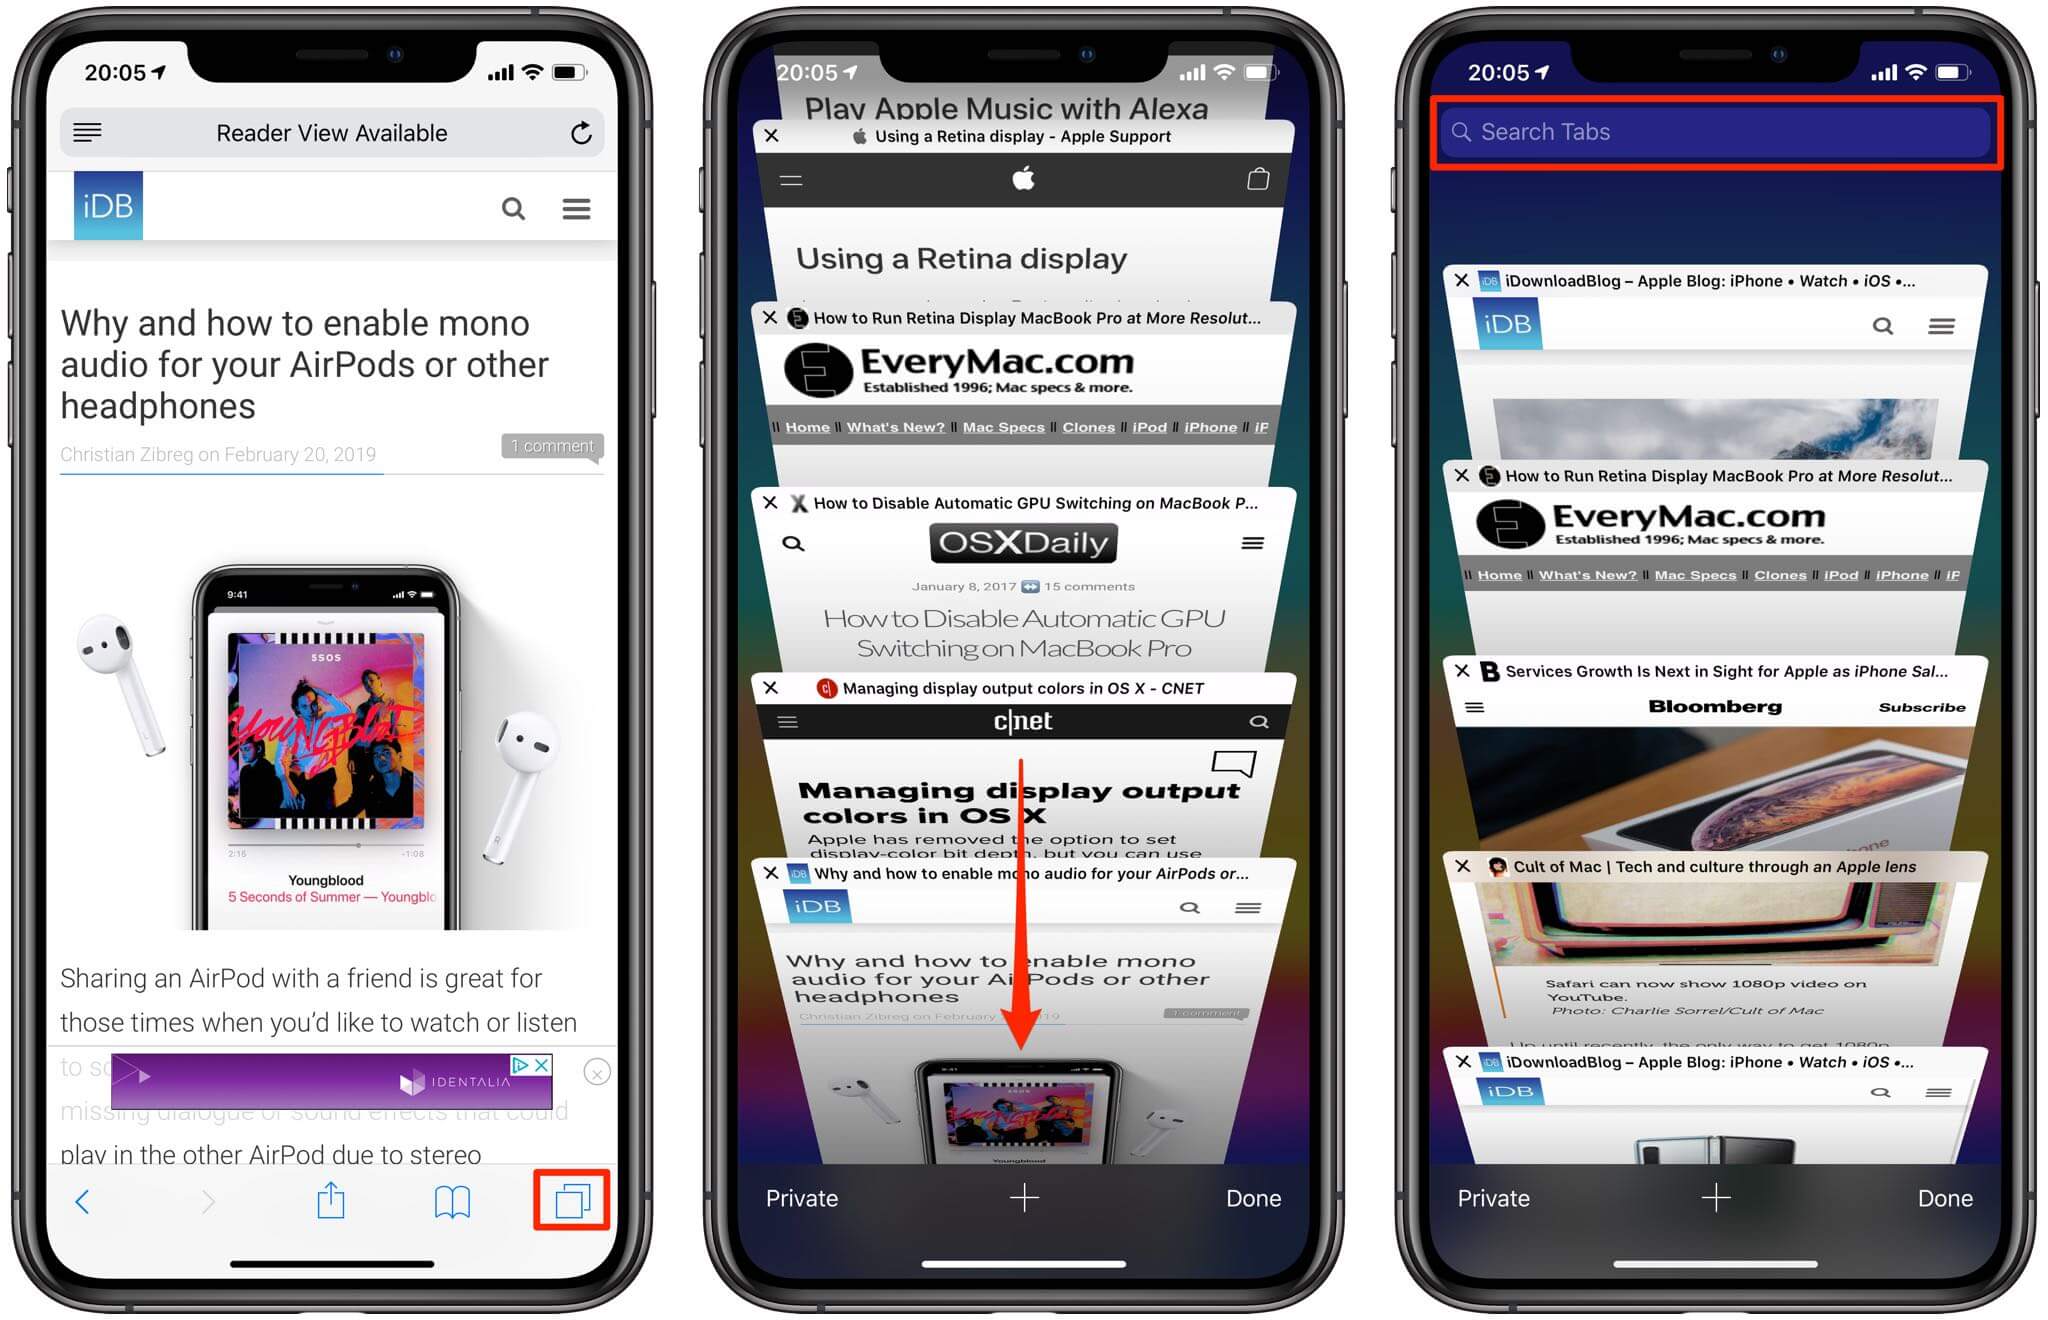 How to Search Tabs in Safari on iPhone and iPad